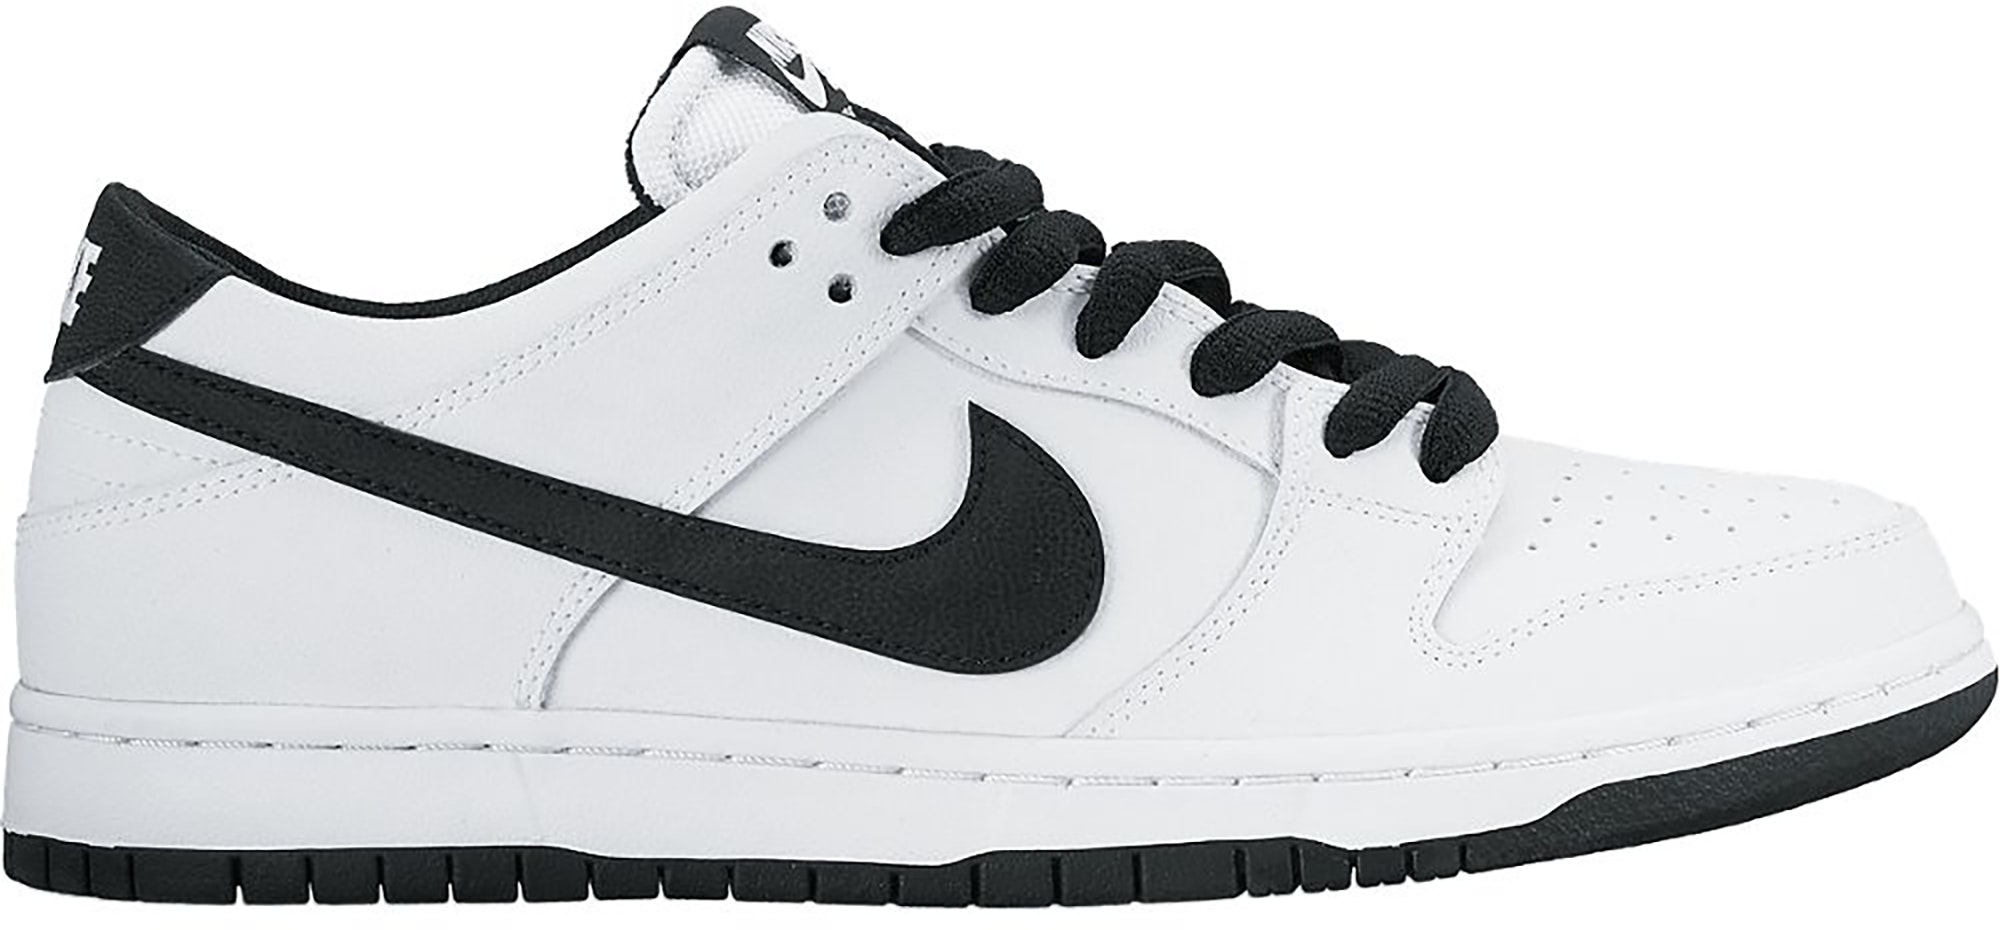 Nike SB Dunk Low Pro White/Black靴